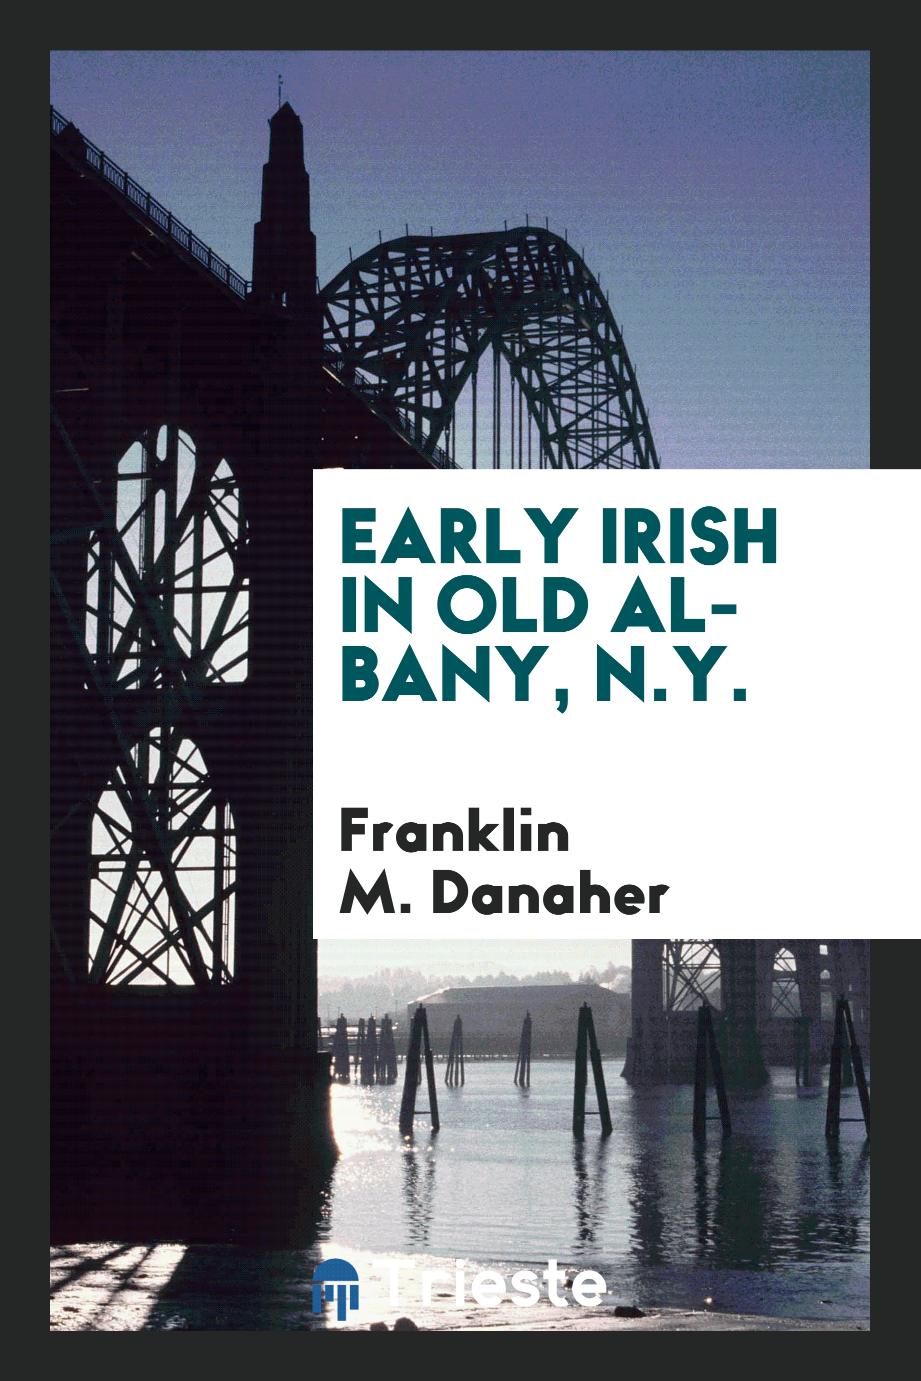 Early Irish in old Albany, N.Y.